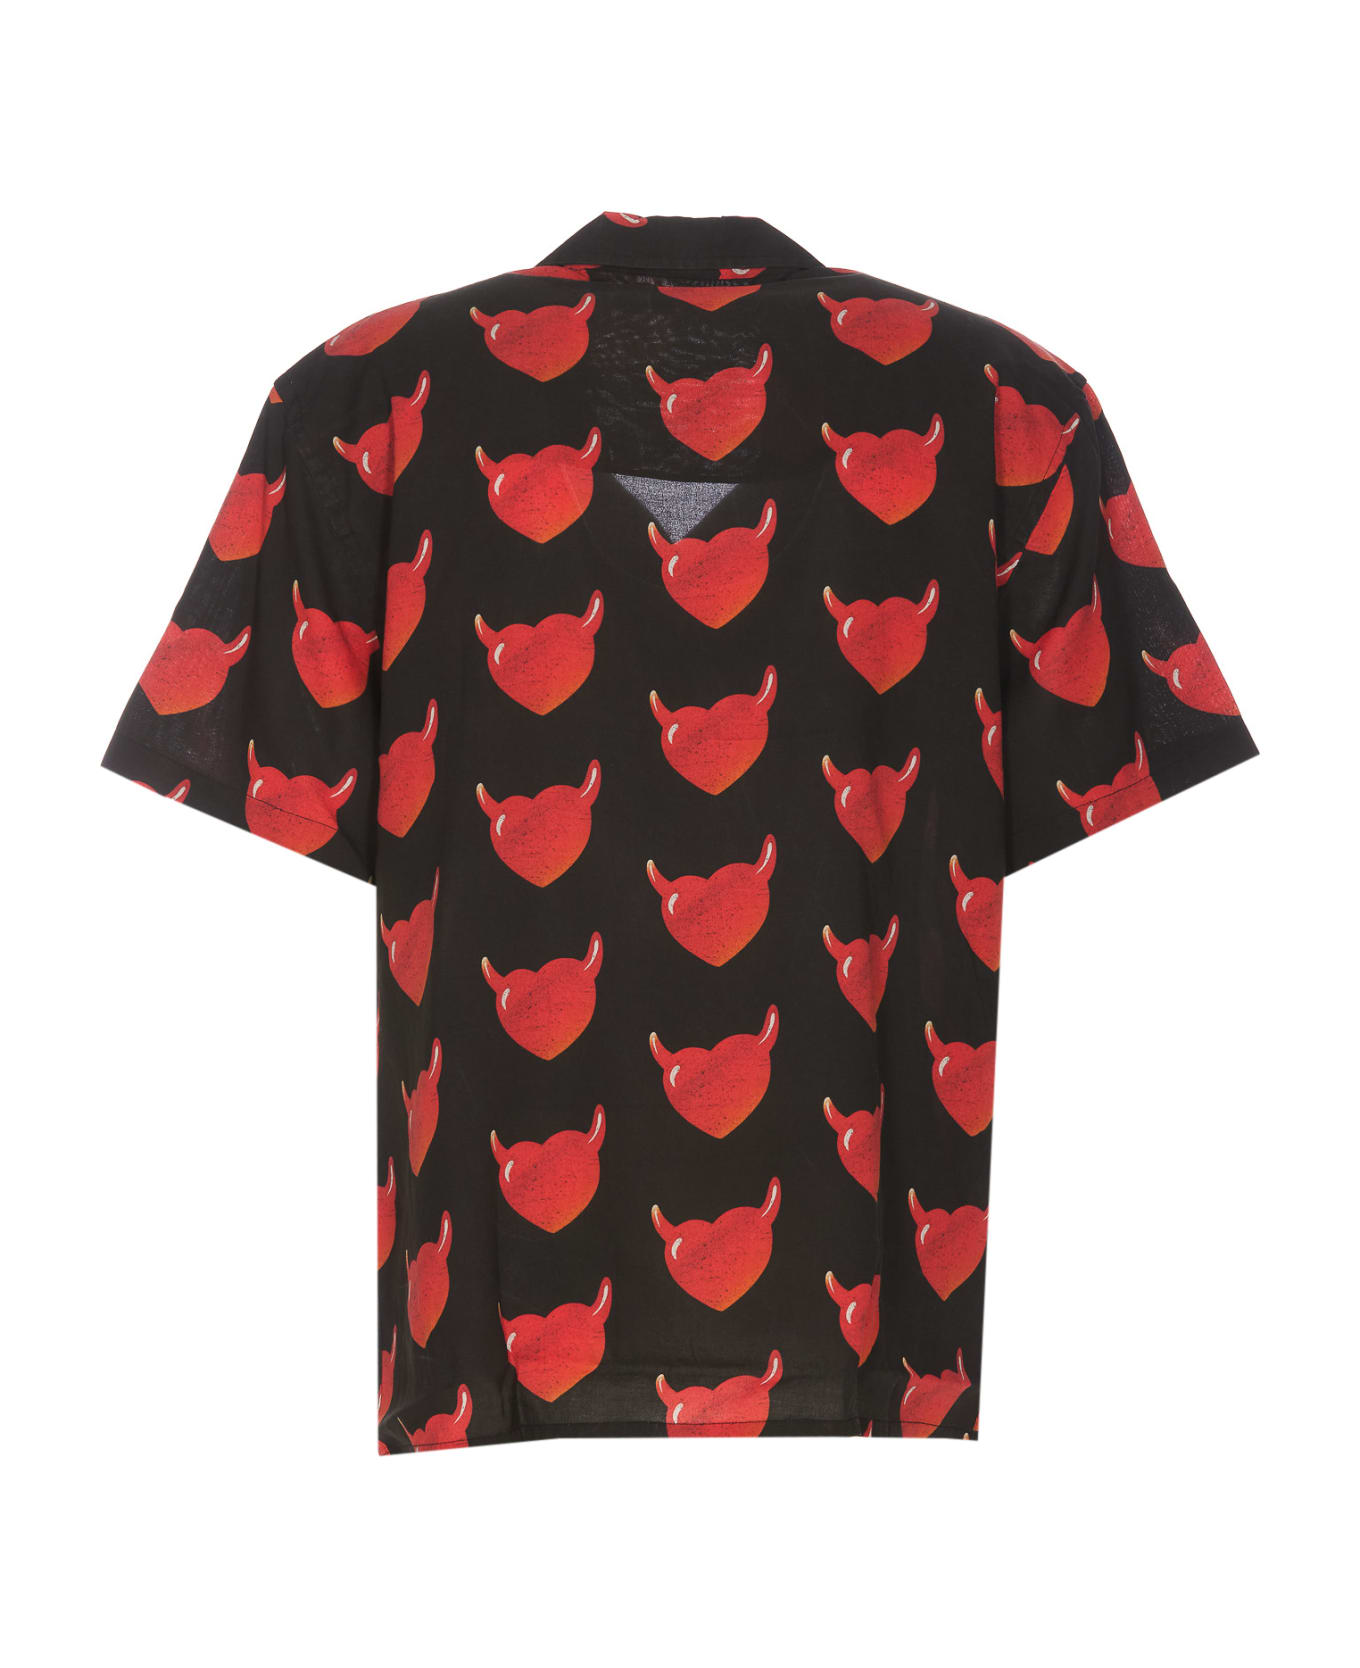 Vision of Super Vos Hearts Shirt - Black